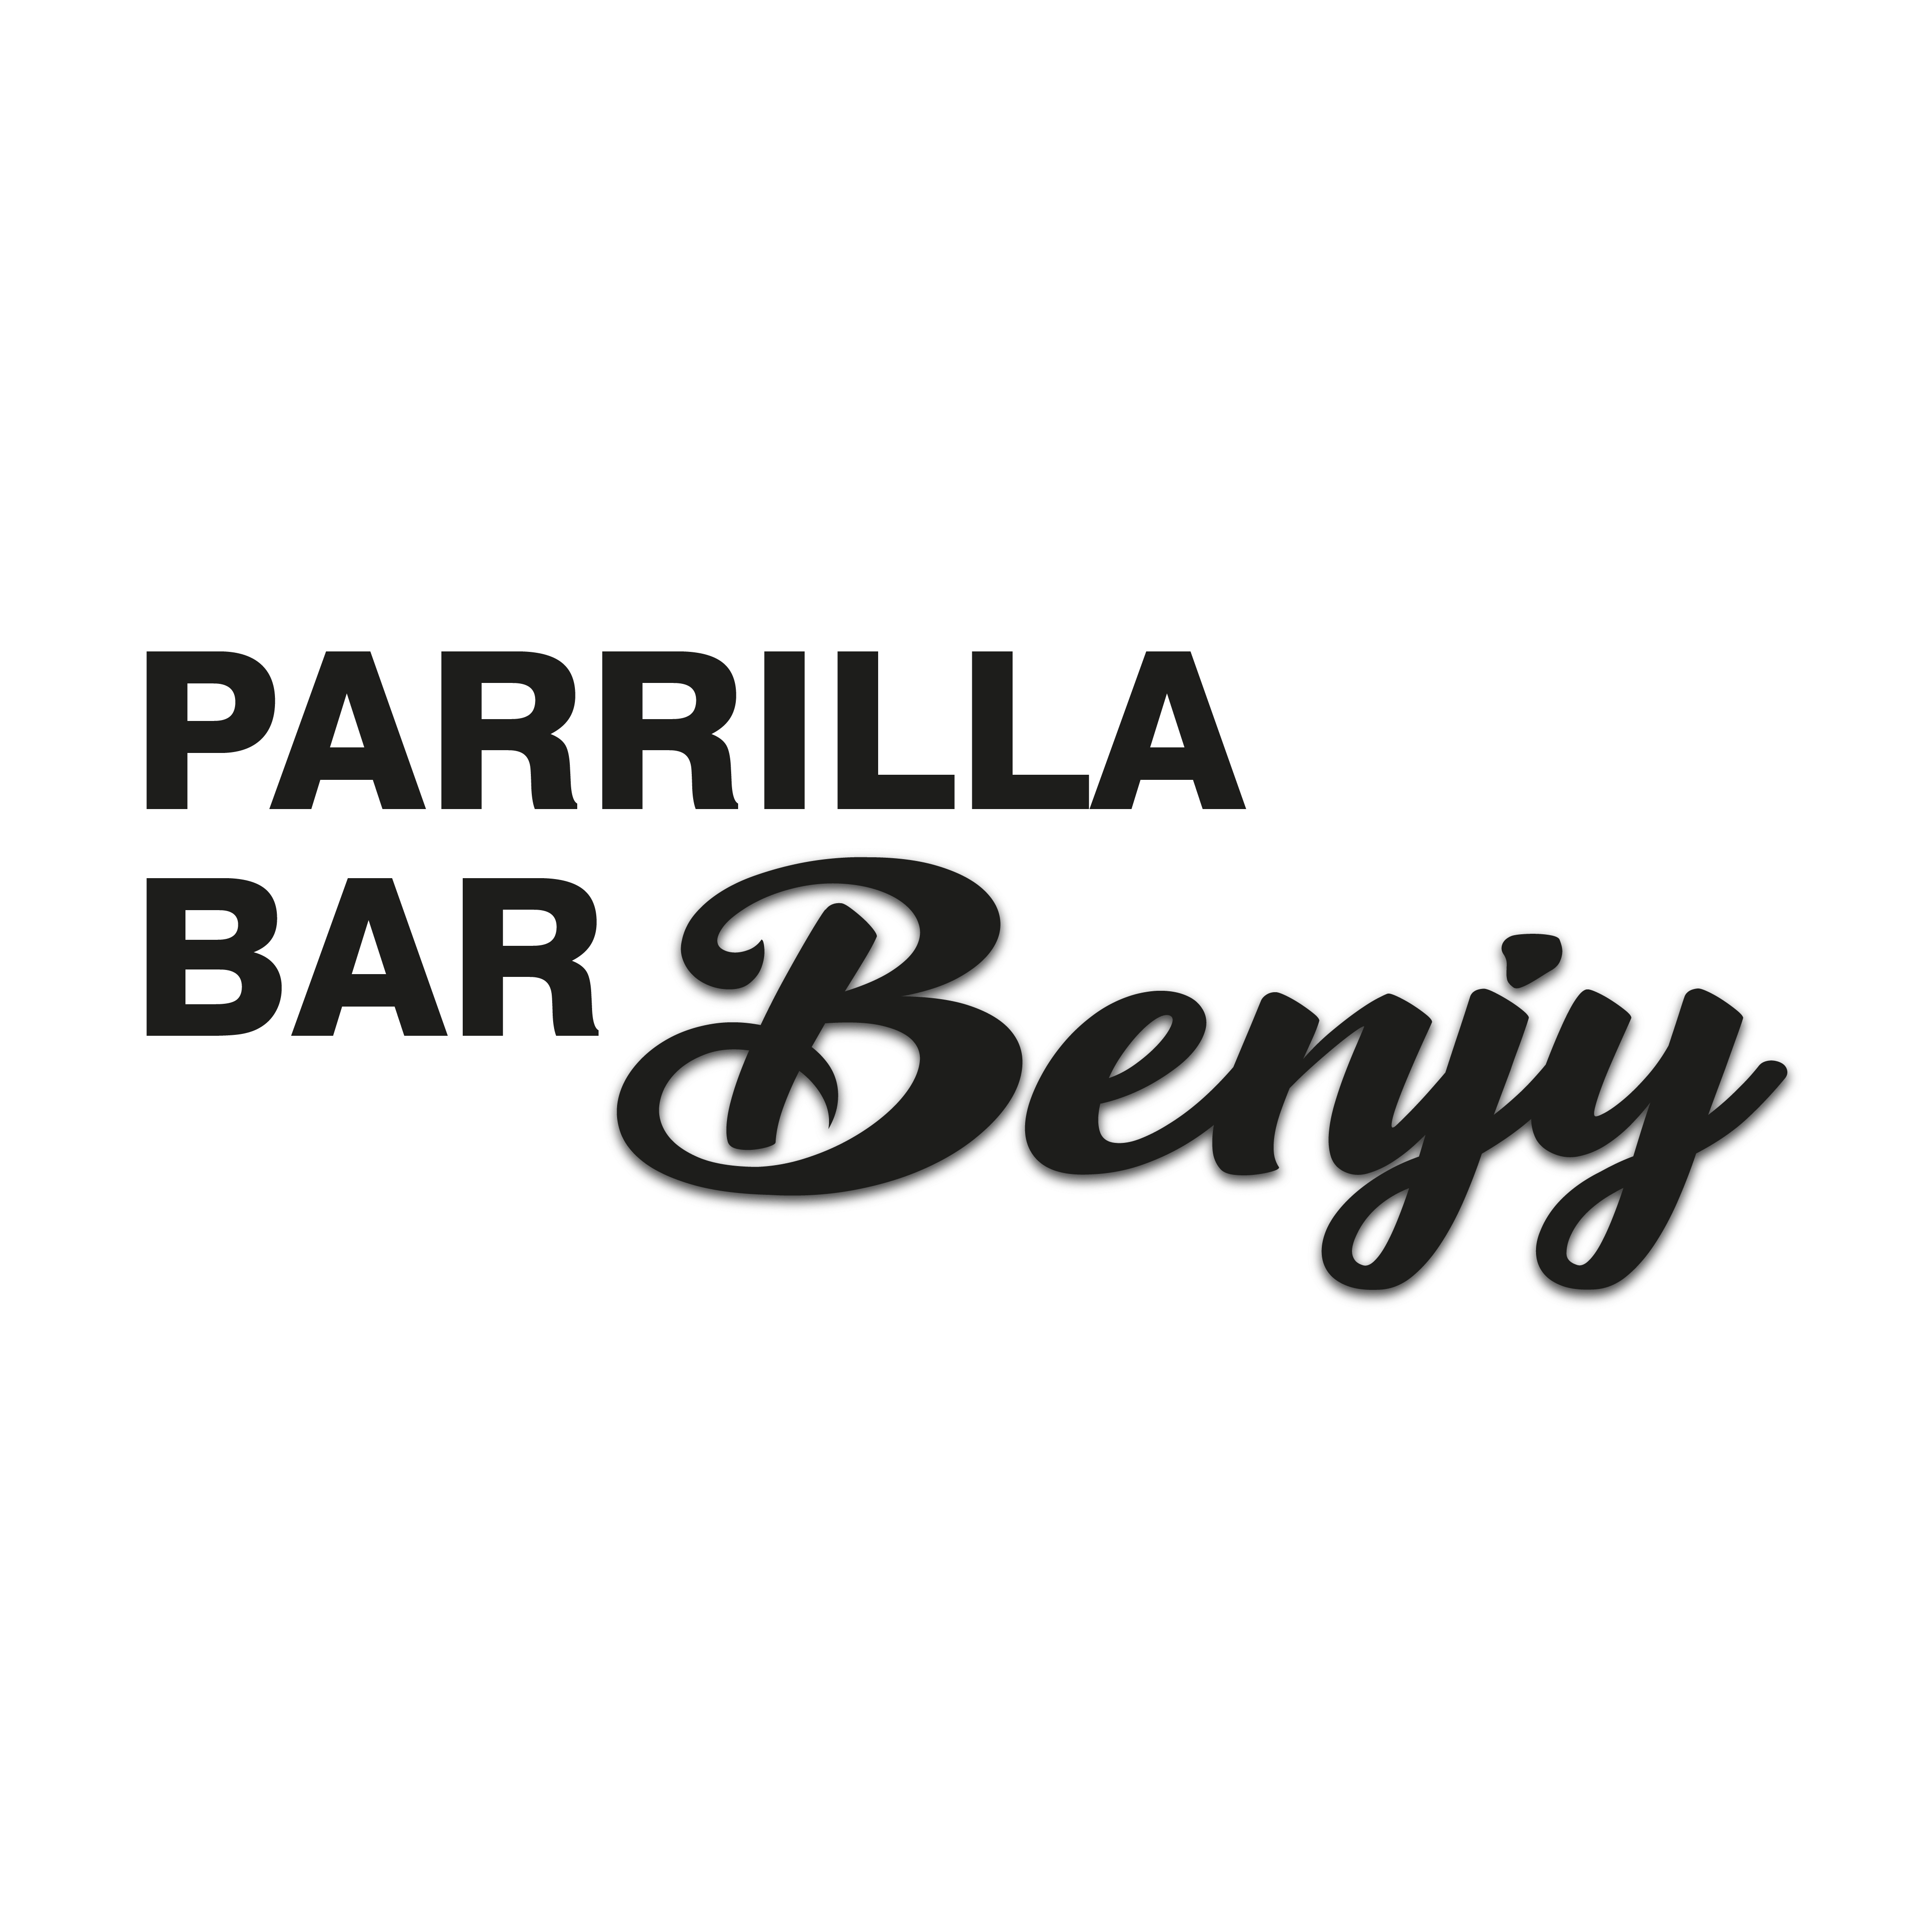 Parrilla Bar Benjy